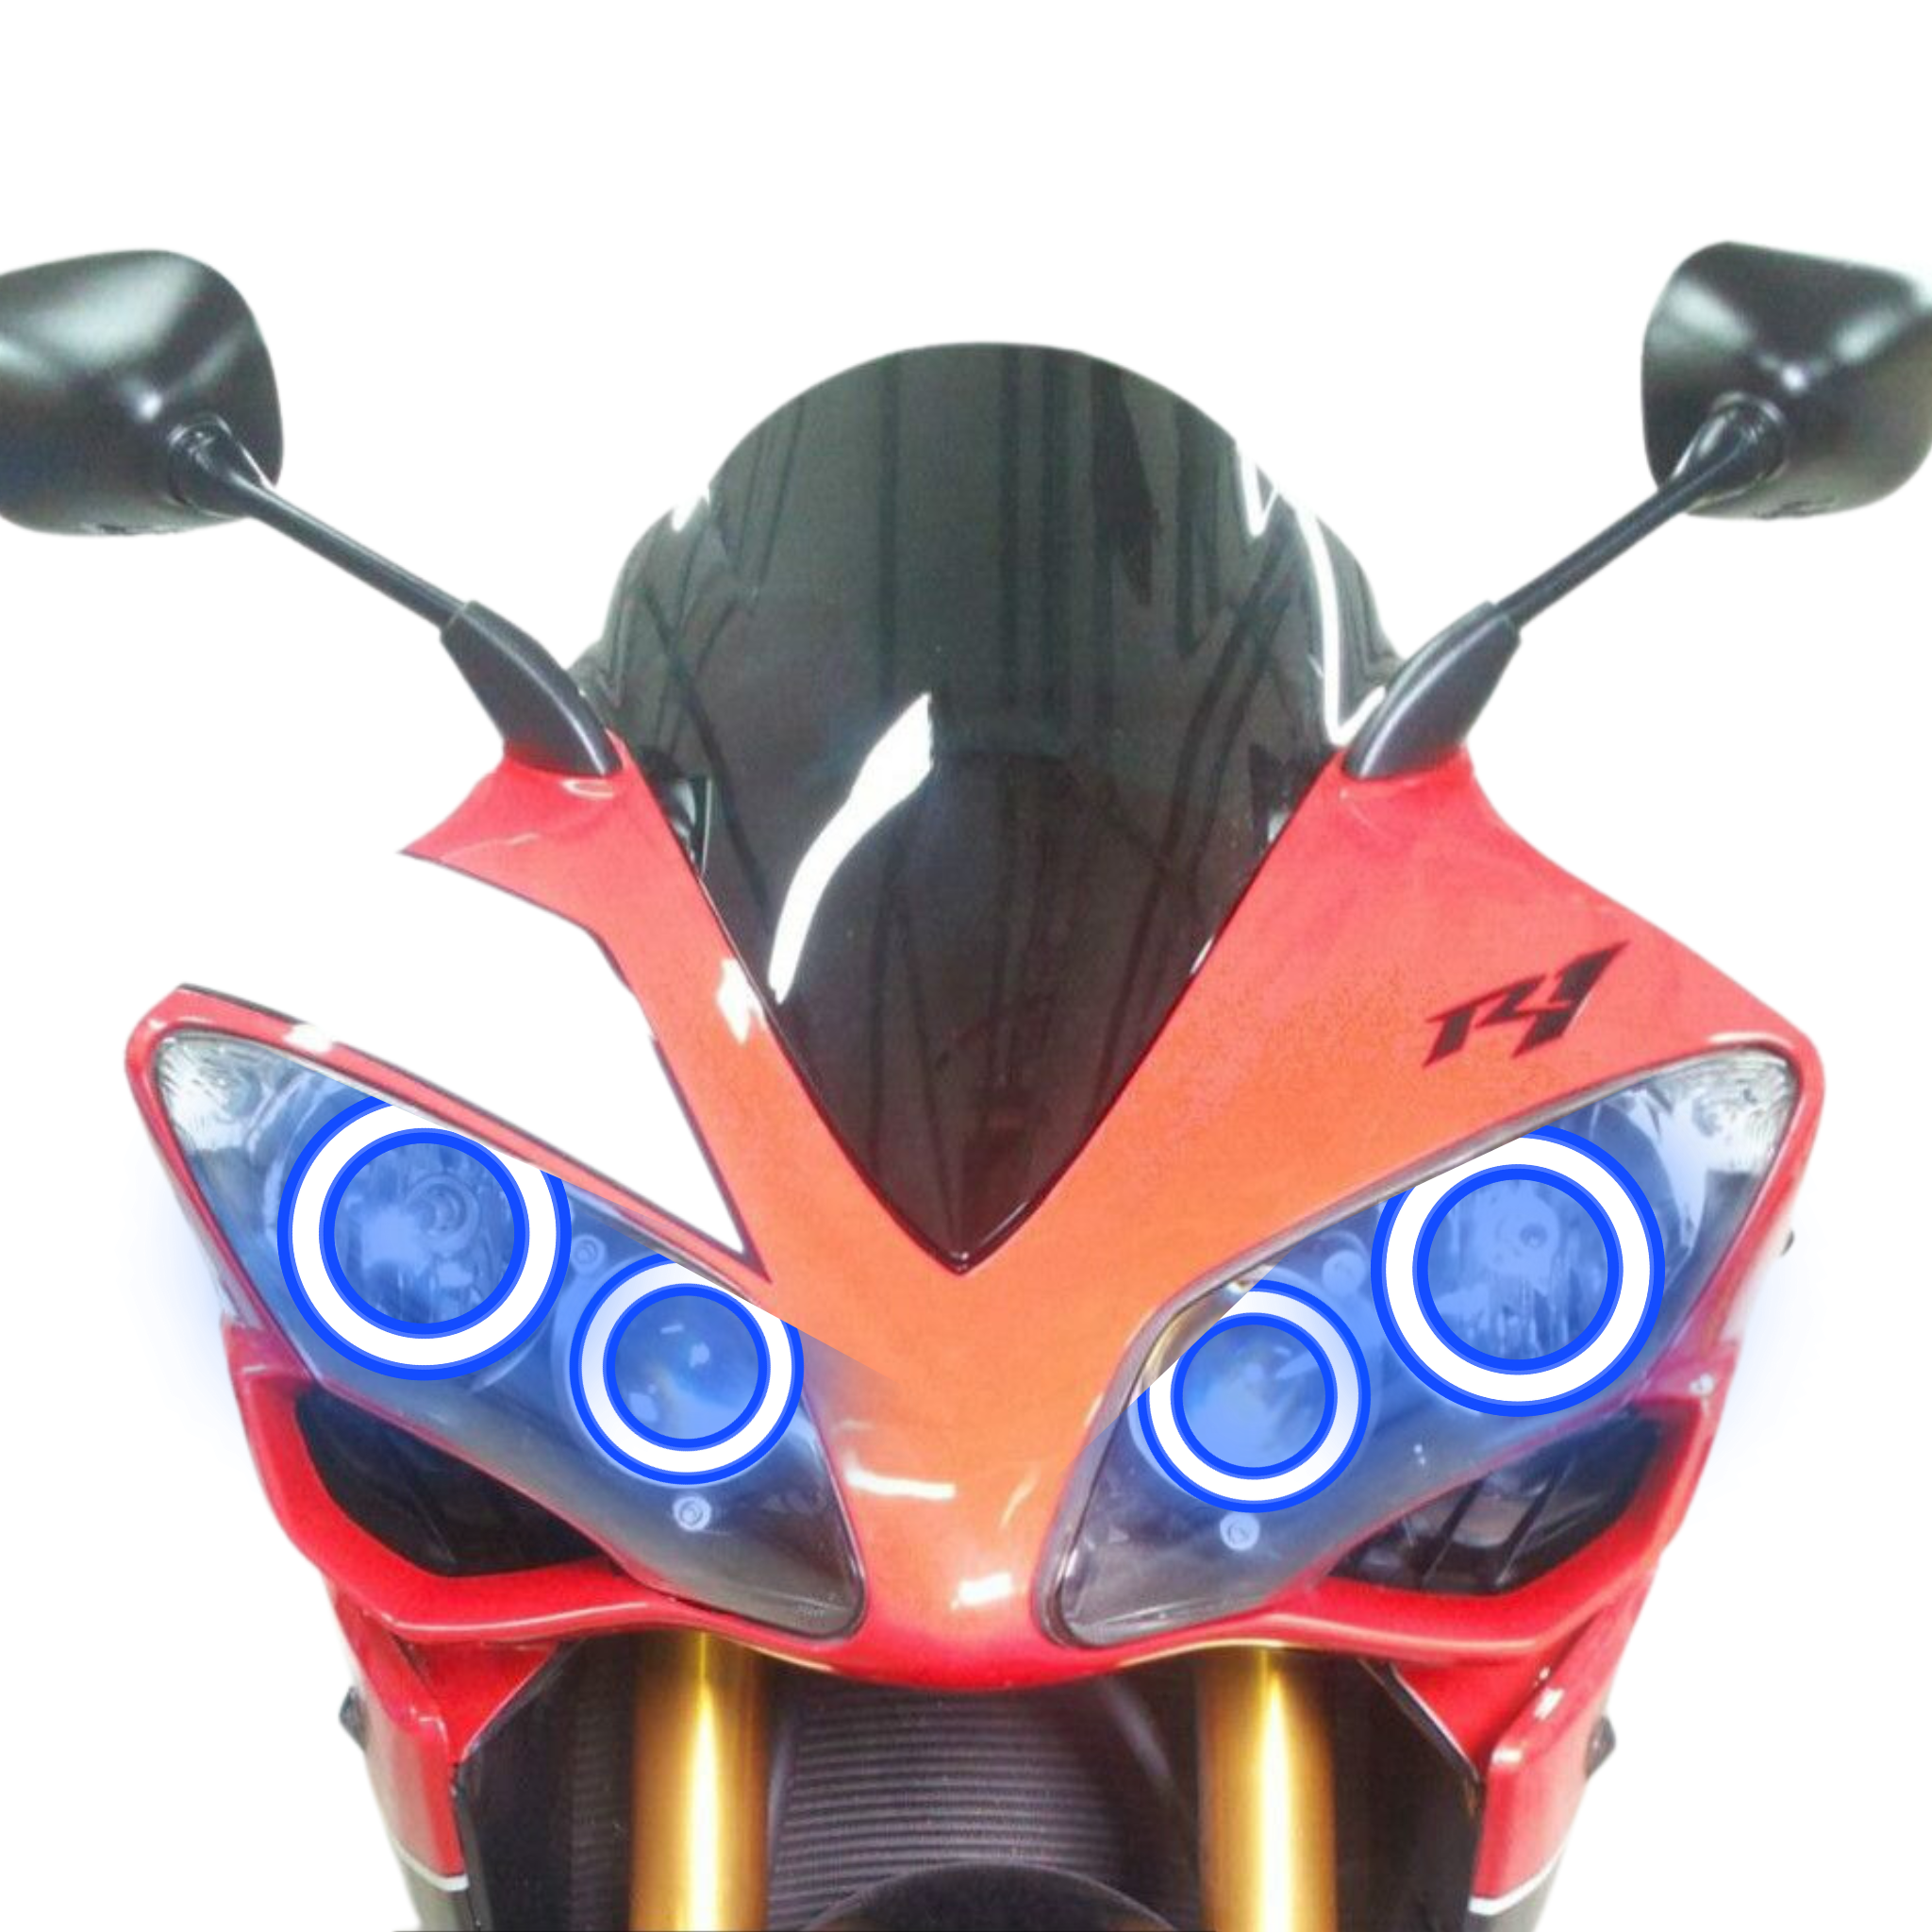 Yamaha R1 Motorcycle Multicolor Halo Kit (2004-2008)